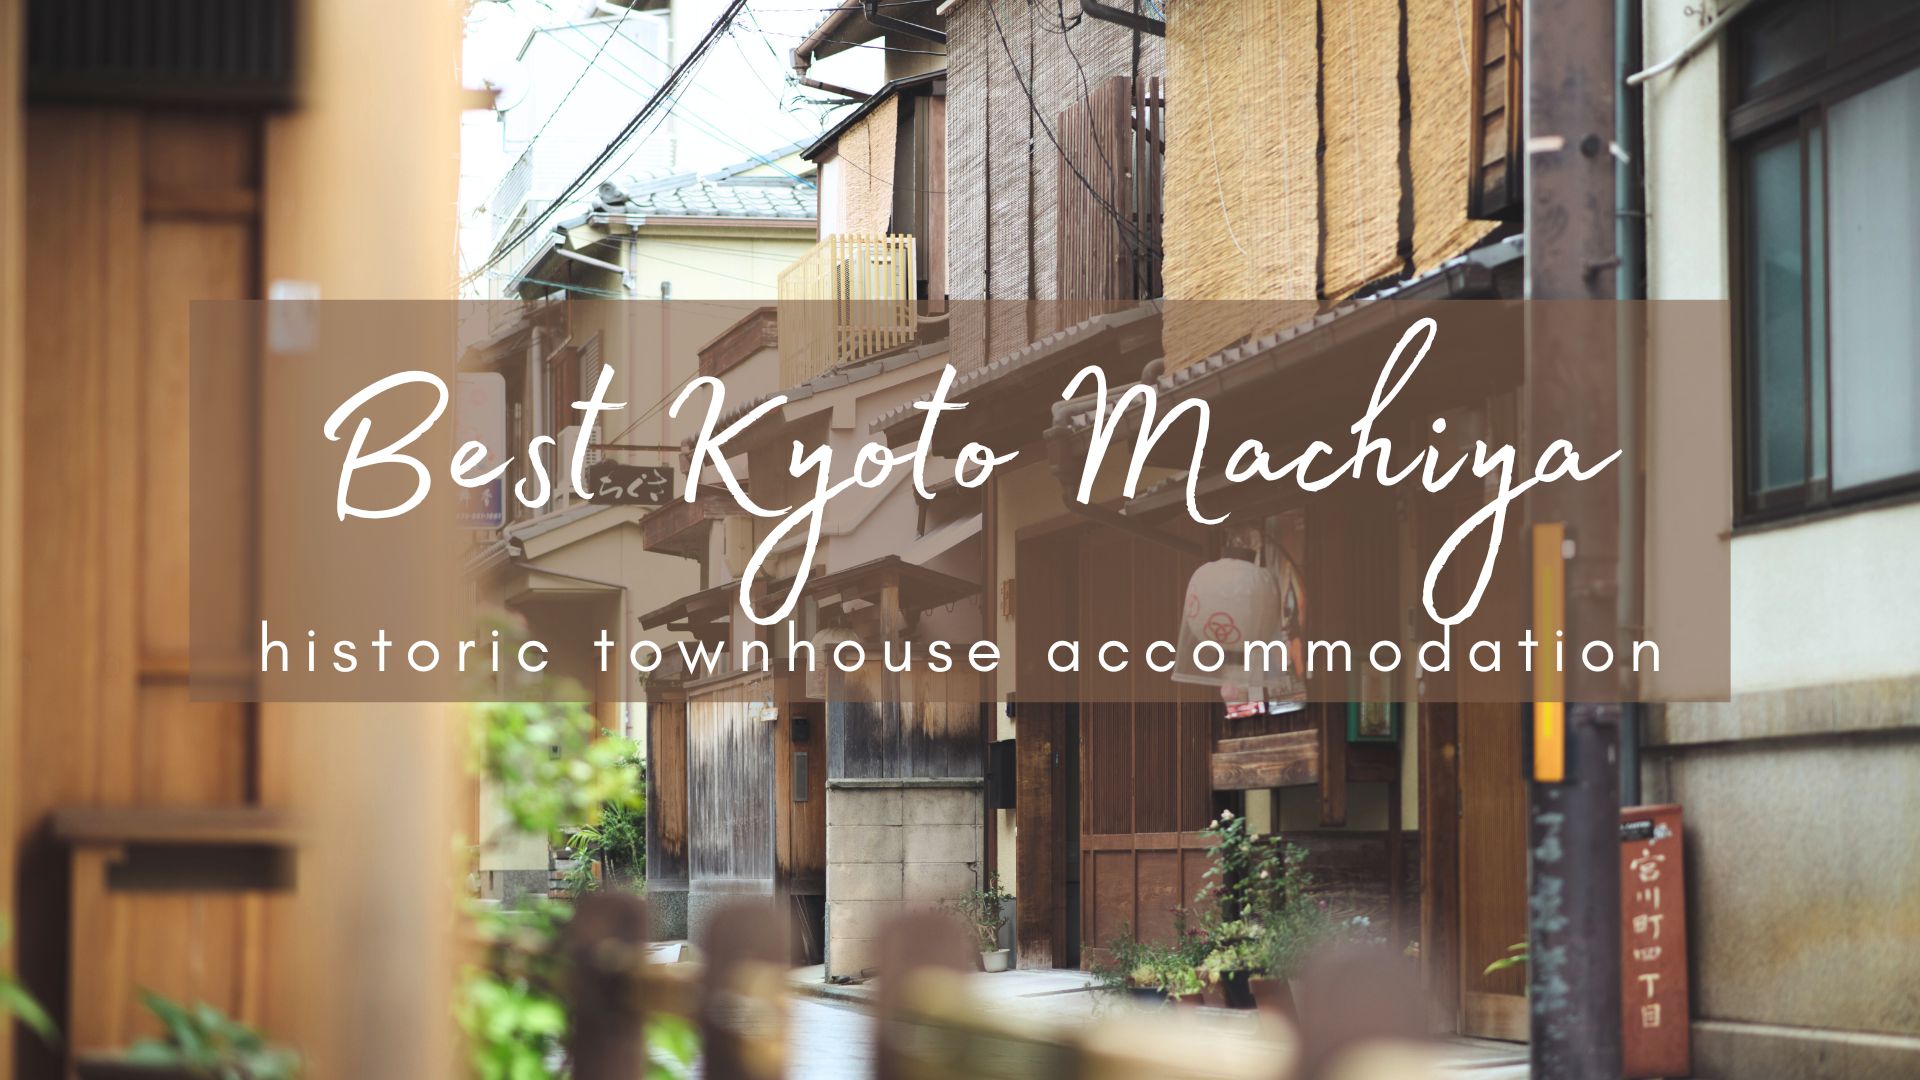 Kyoto machiya stays, where to stay in a machiya in Kyoto, traditional machiya accommodation in Kyoto, where to stay in Kyoto, Kyoto machiya accommodation